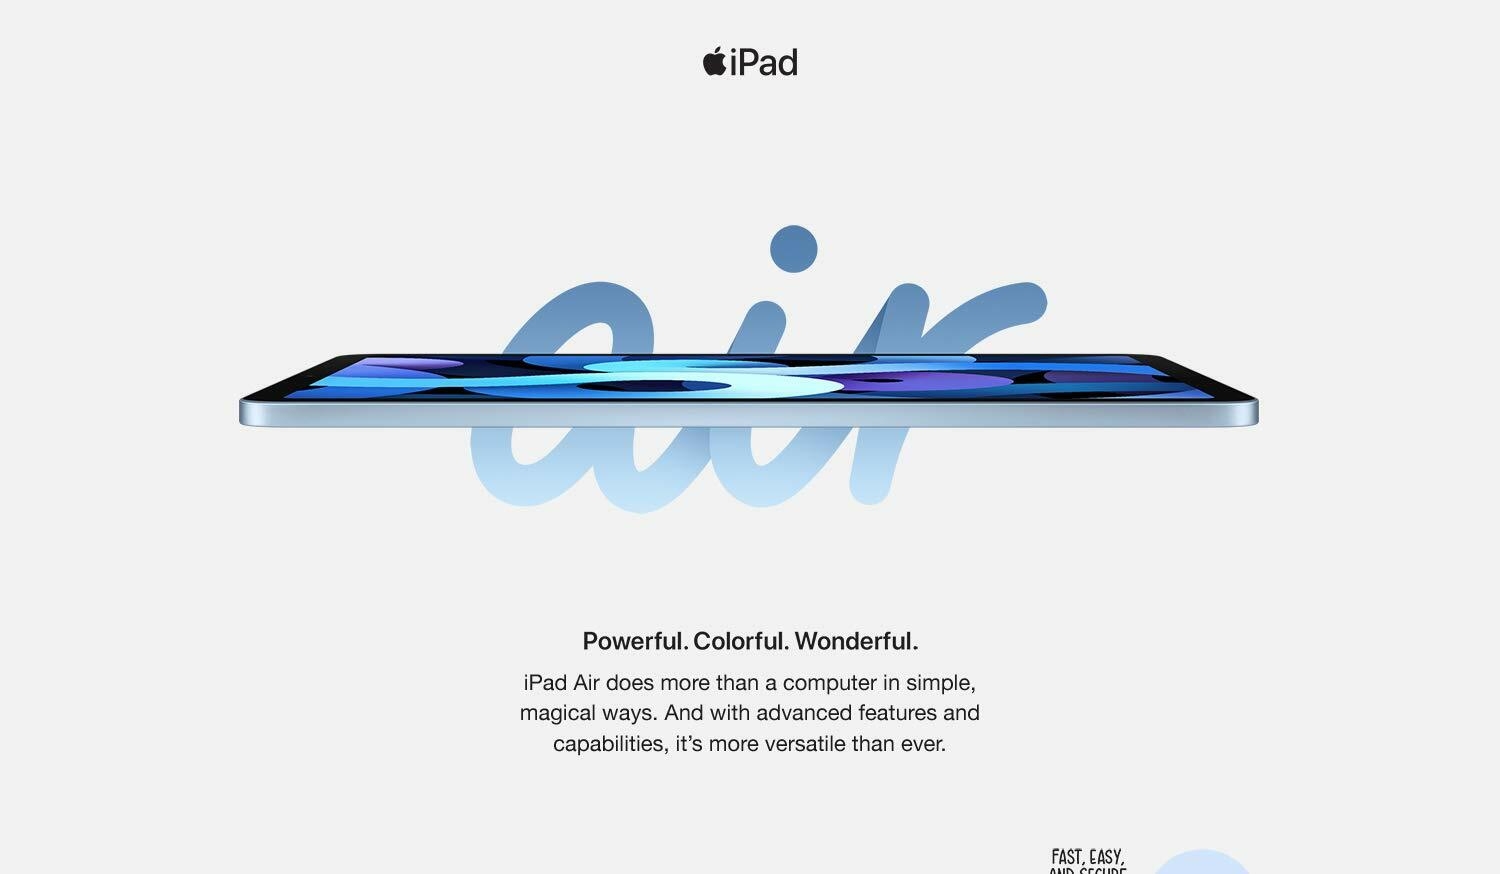 iPad Air.  Powerful.  Colorful.  Wonderful.